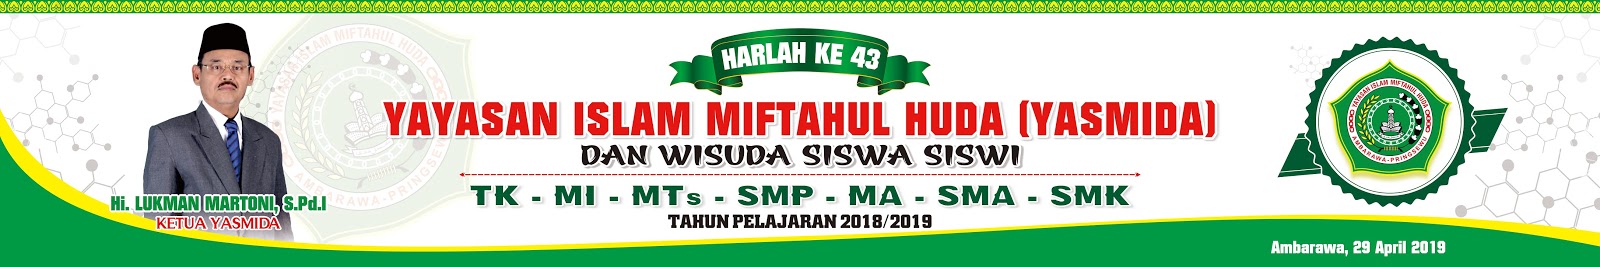  Desain  Banner  Harlah dan Wisuda  Yasmida Ambarawa 2021 